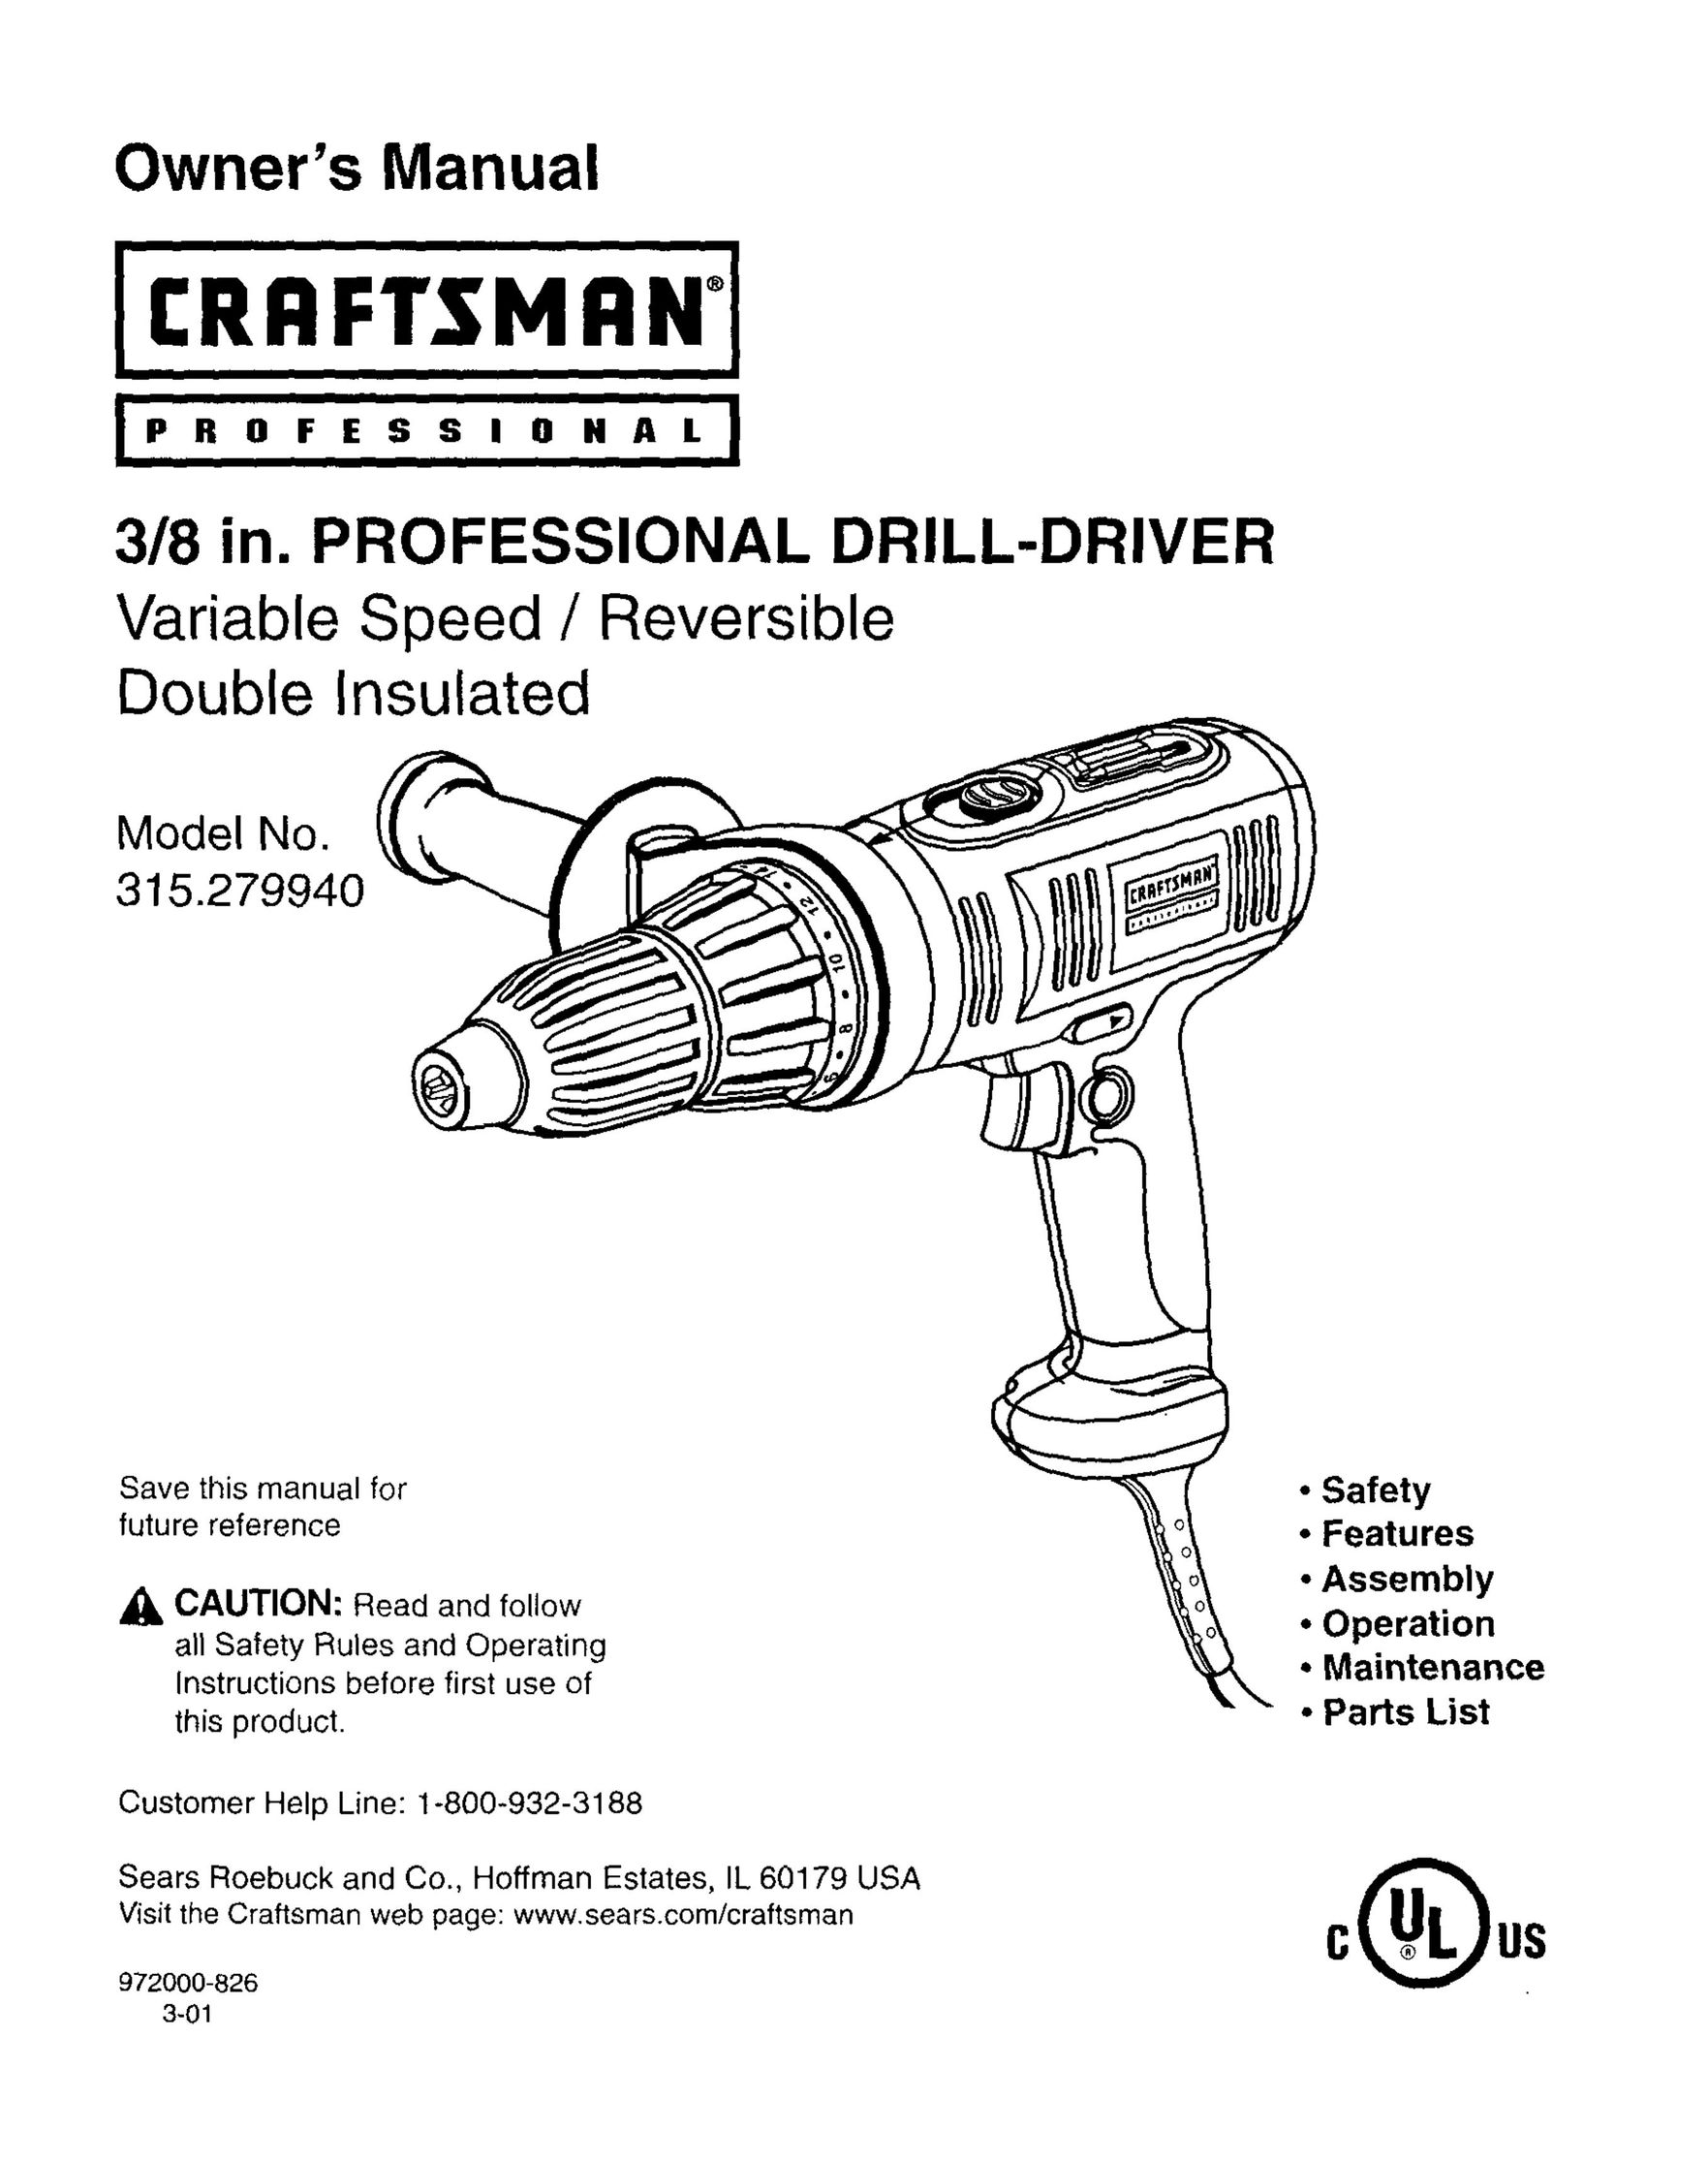 Craftsman 315.27994 Drill User Manual